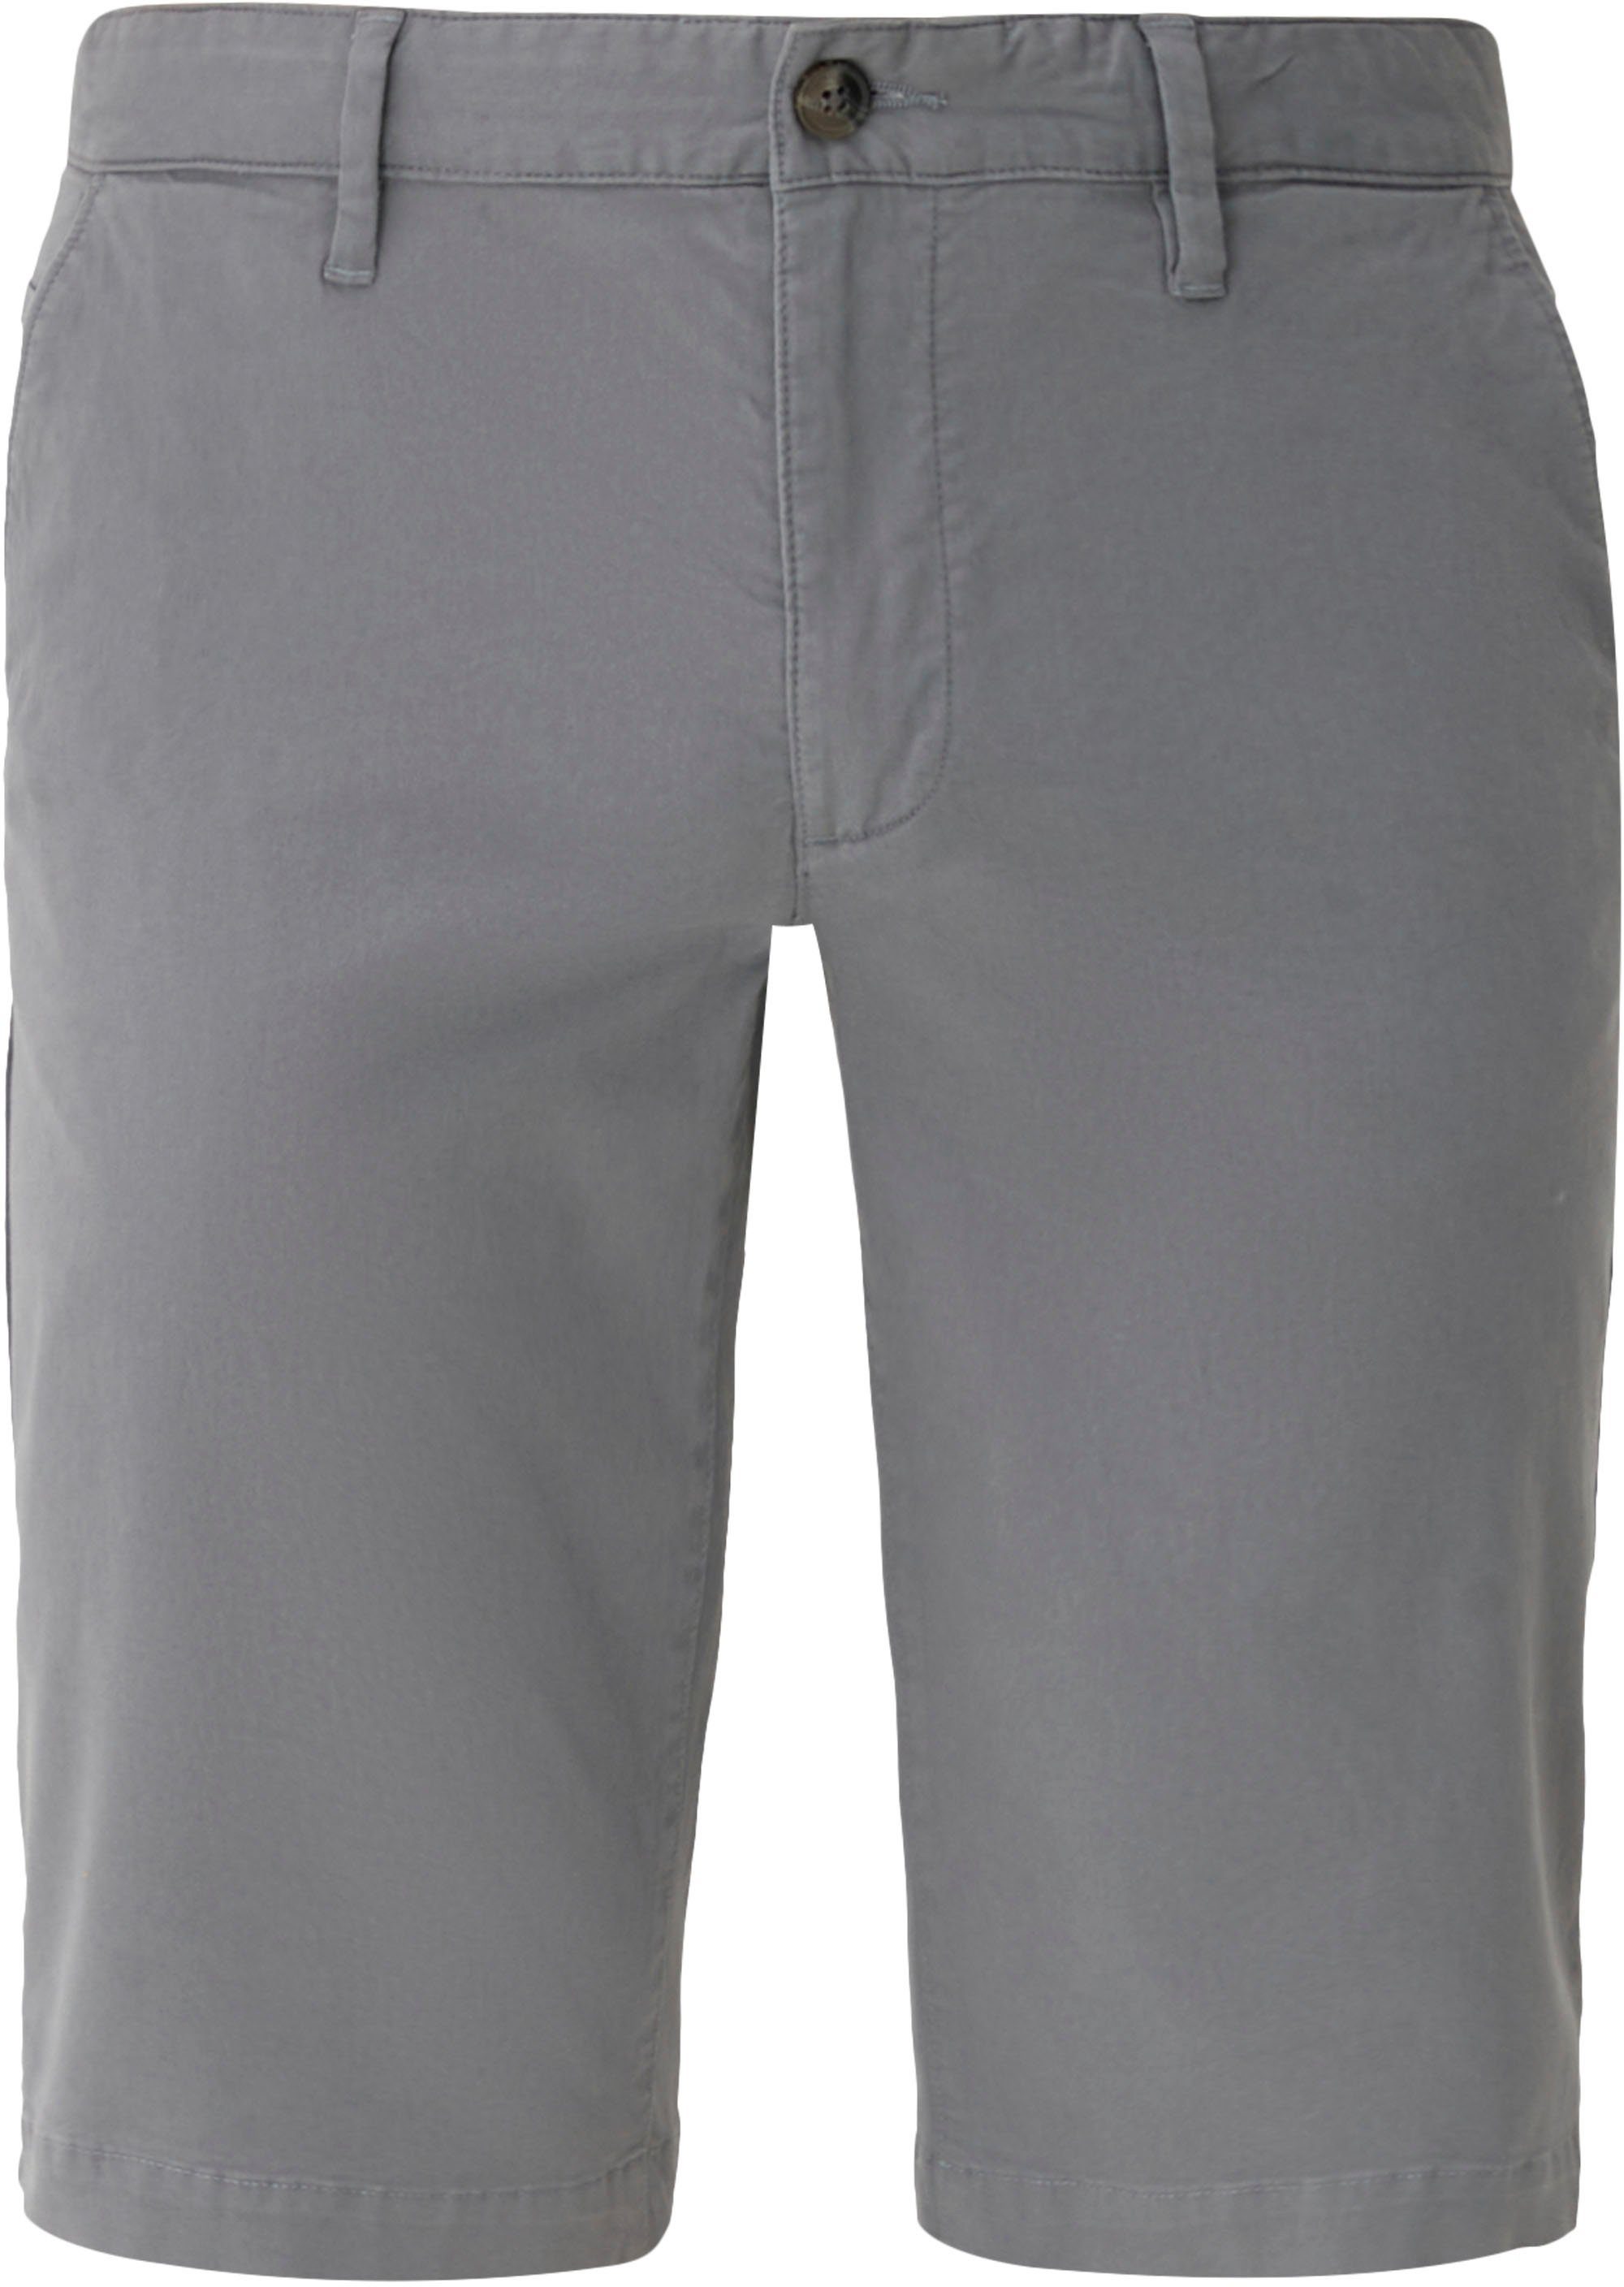 s.Oliver grey/black Shorts